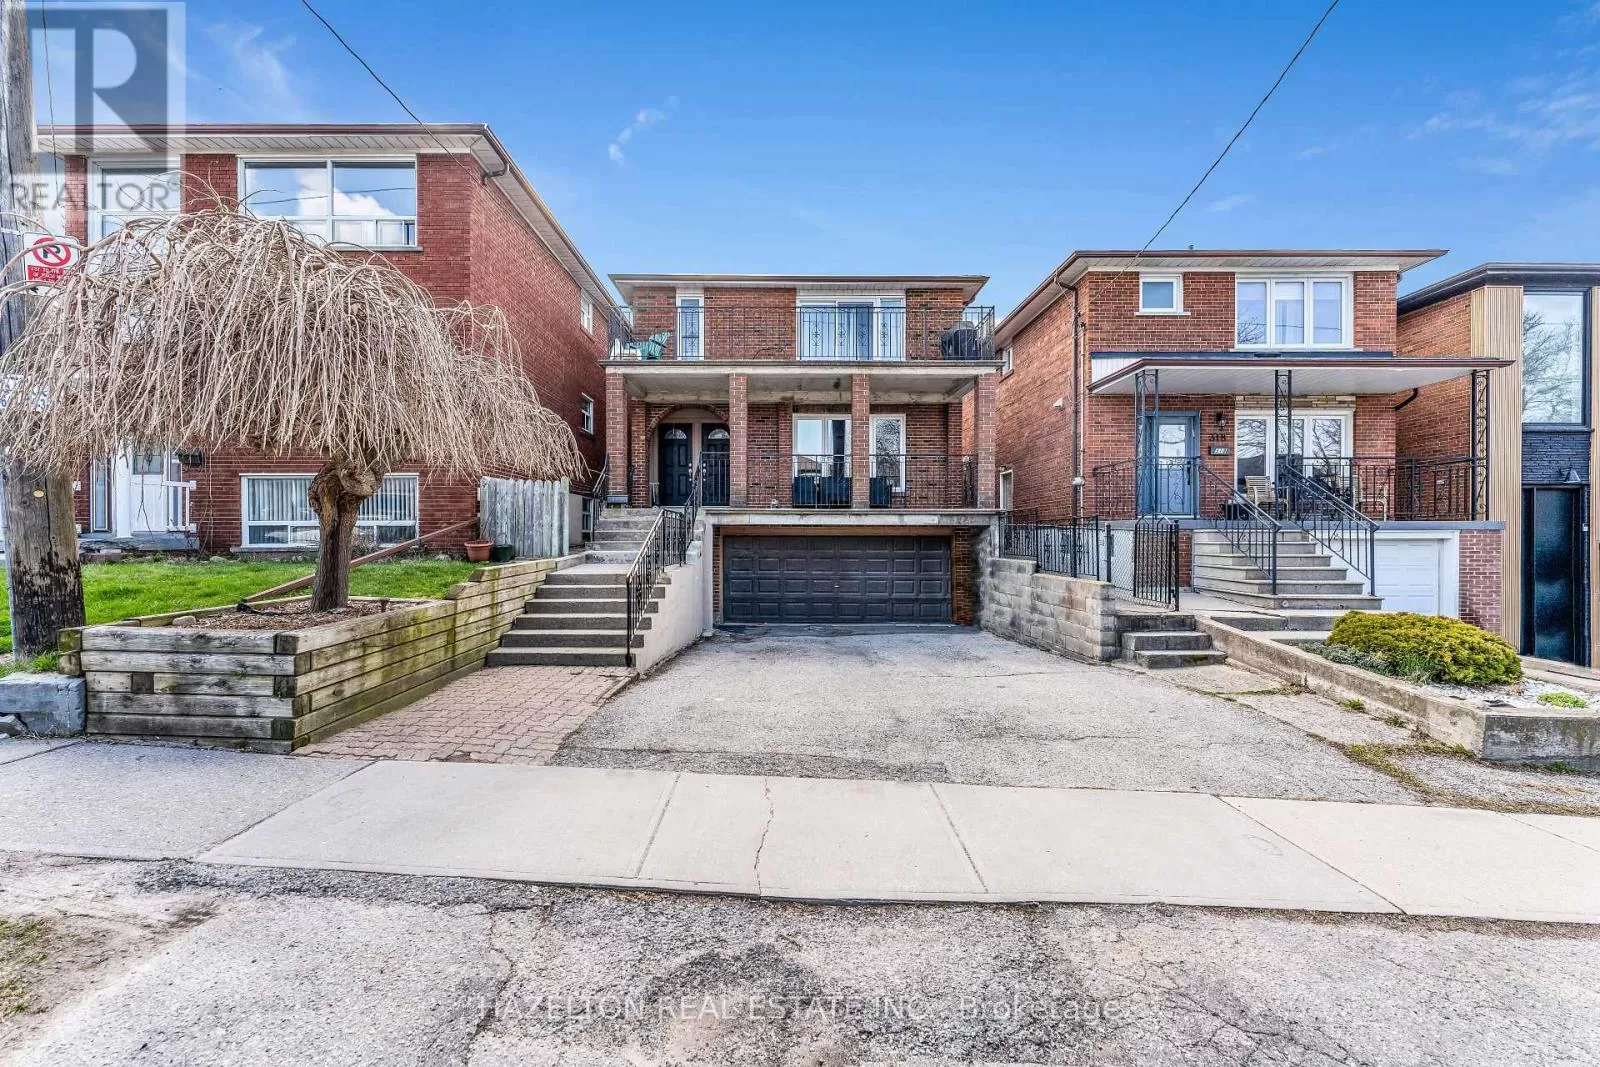 Multi-Family for rent: 314 Atlas Avenue, Toronto, Ontario M6C 3P9